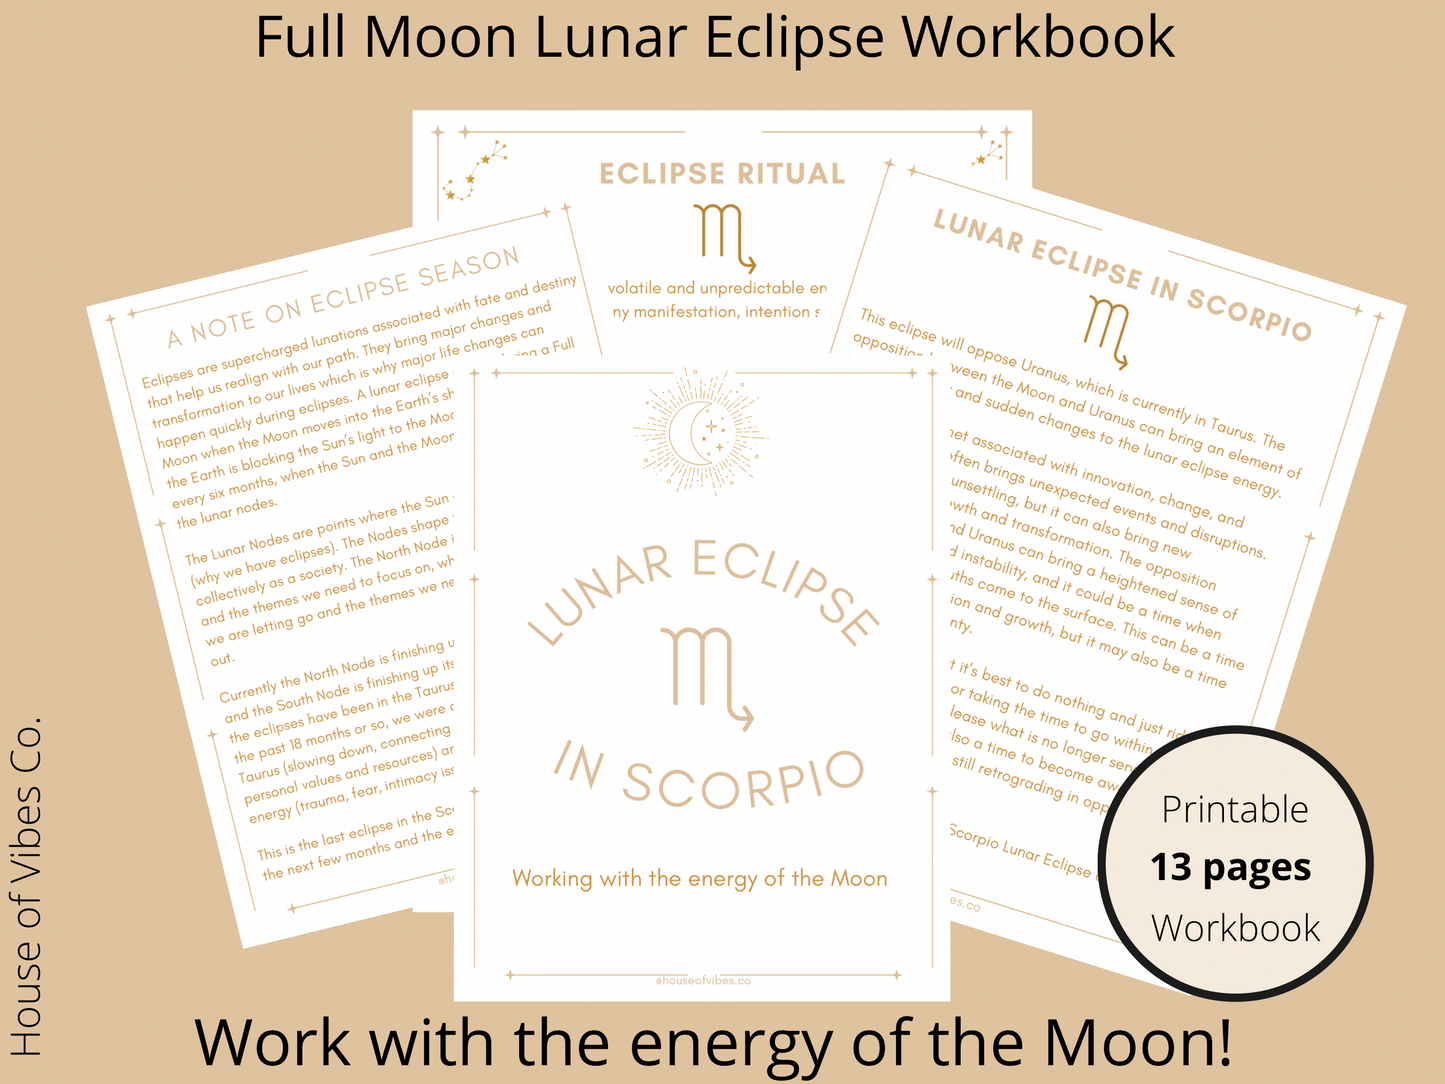 Full Moon Eclipse in Scorpio Workbook